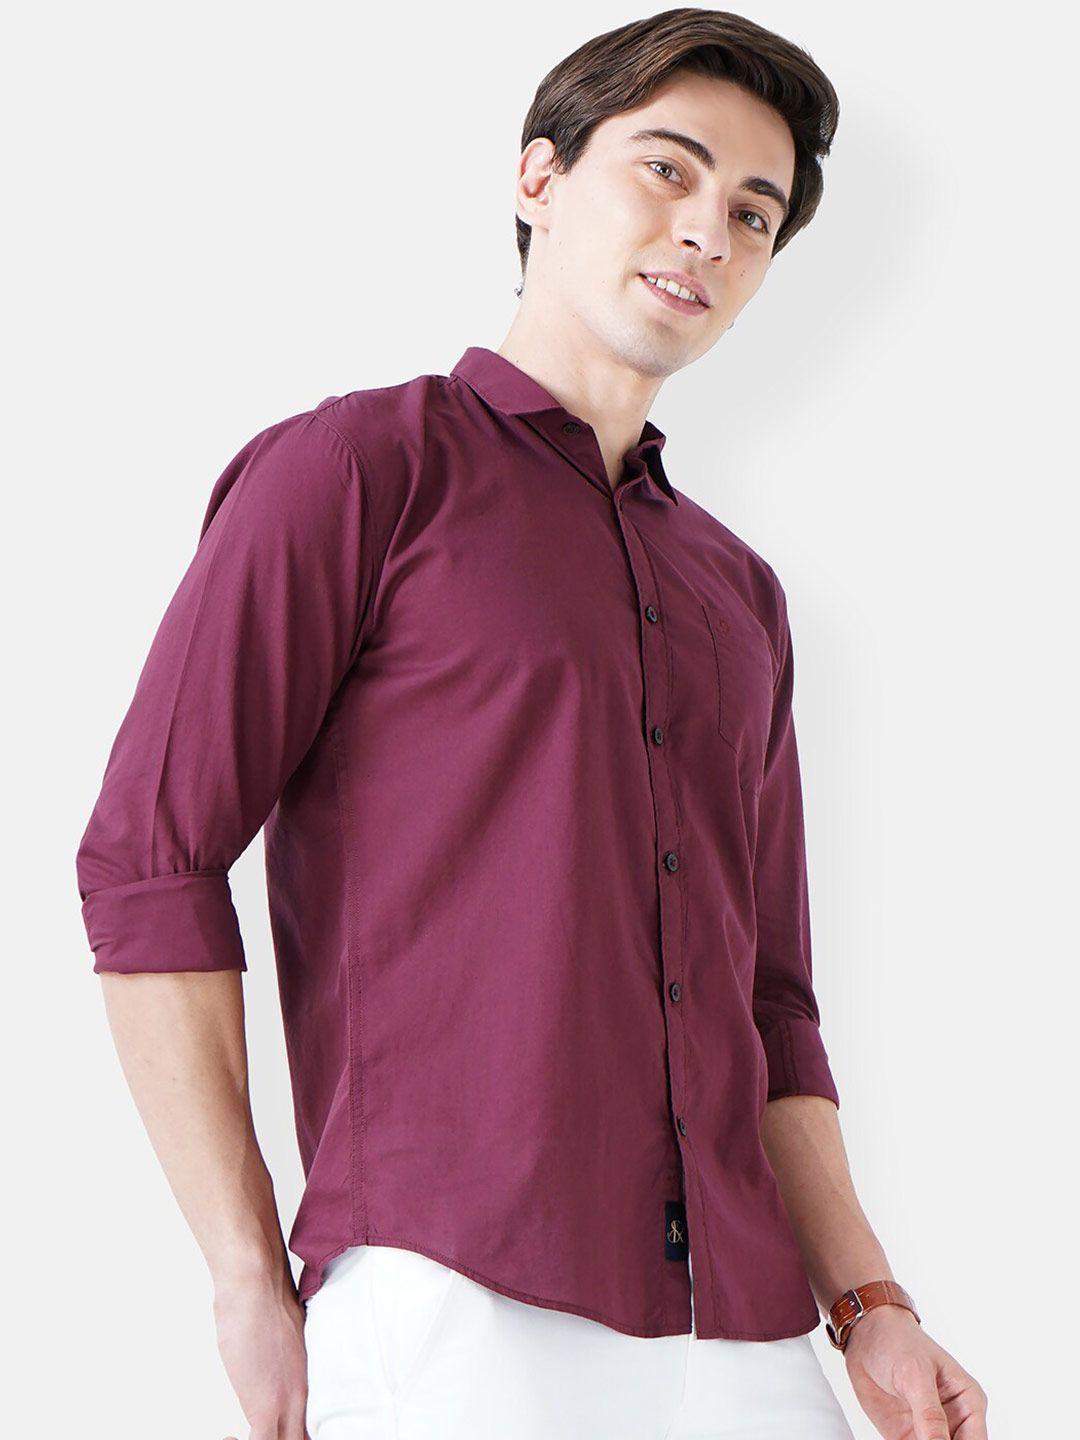 soratia-men-maroon-slim-fit-casual-shirt